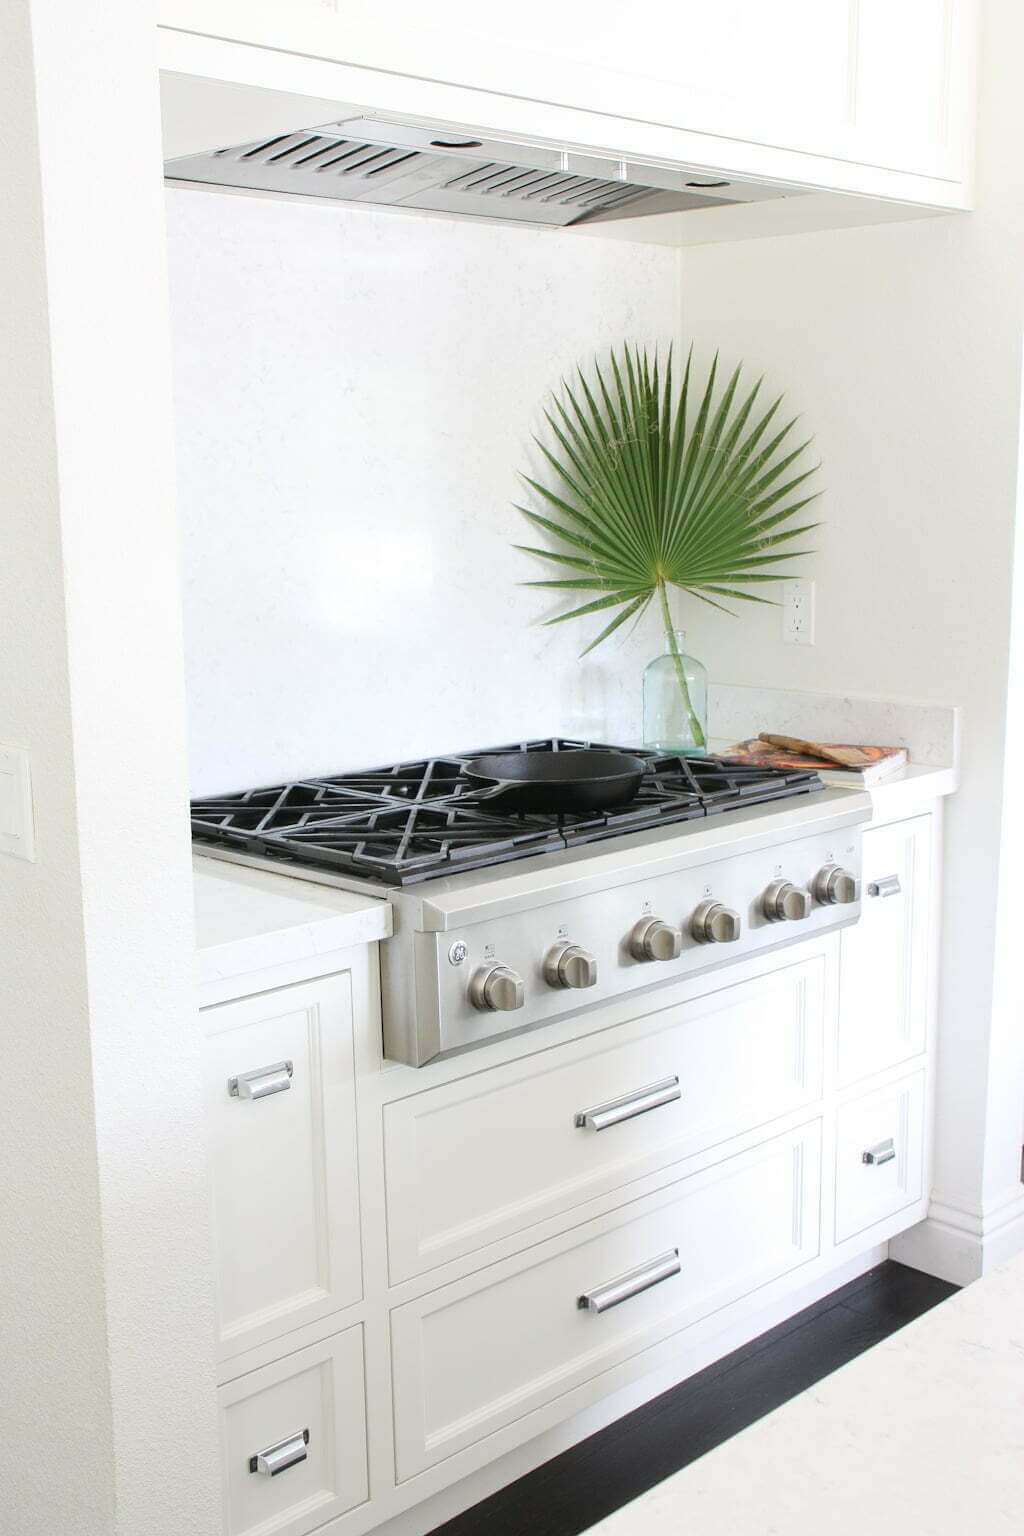 white quartz slab backsplash behind range stove in white kitchen, solid surface